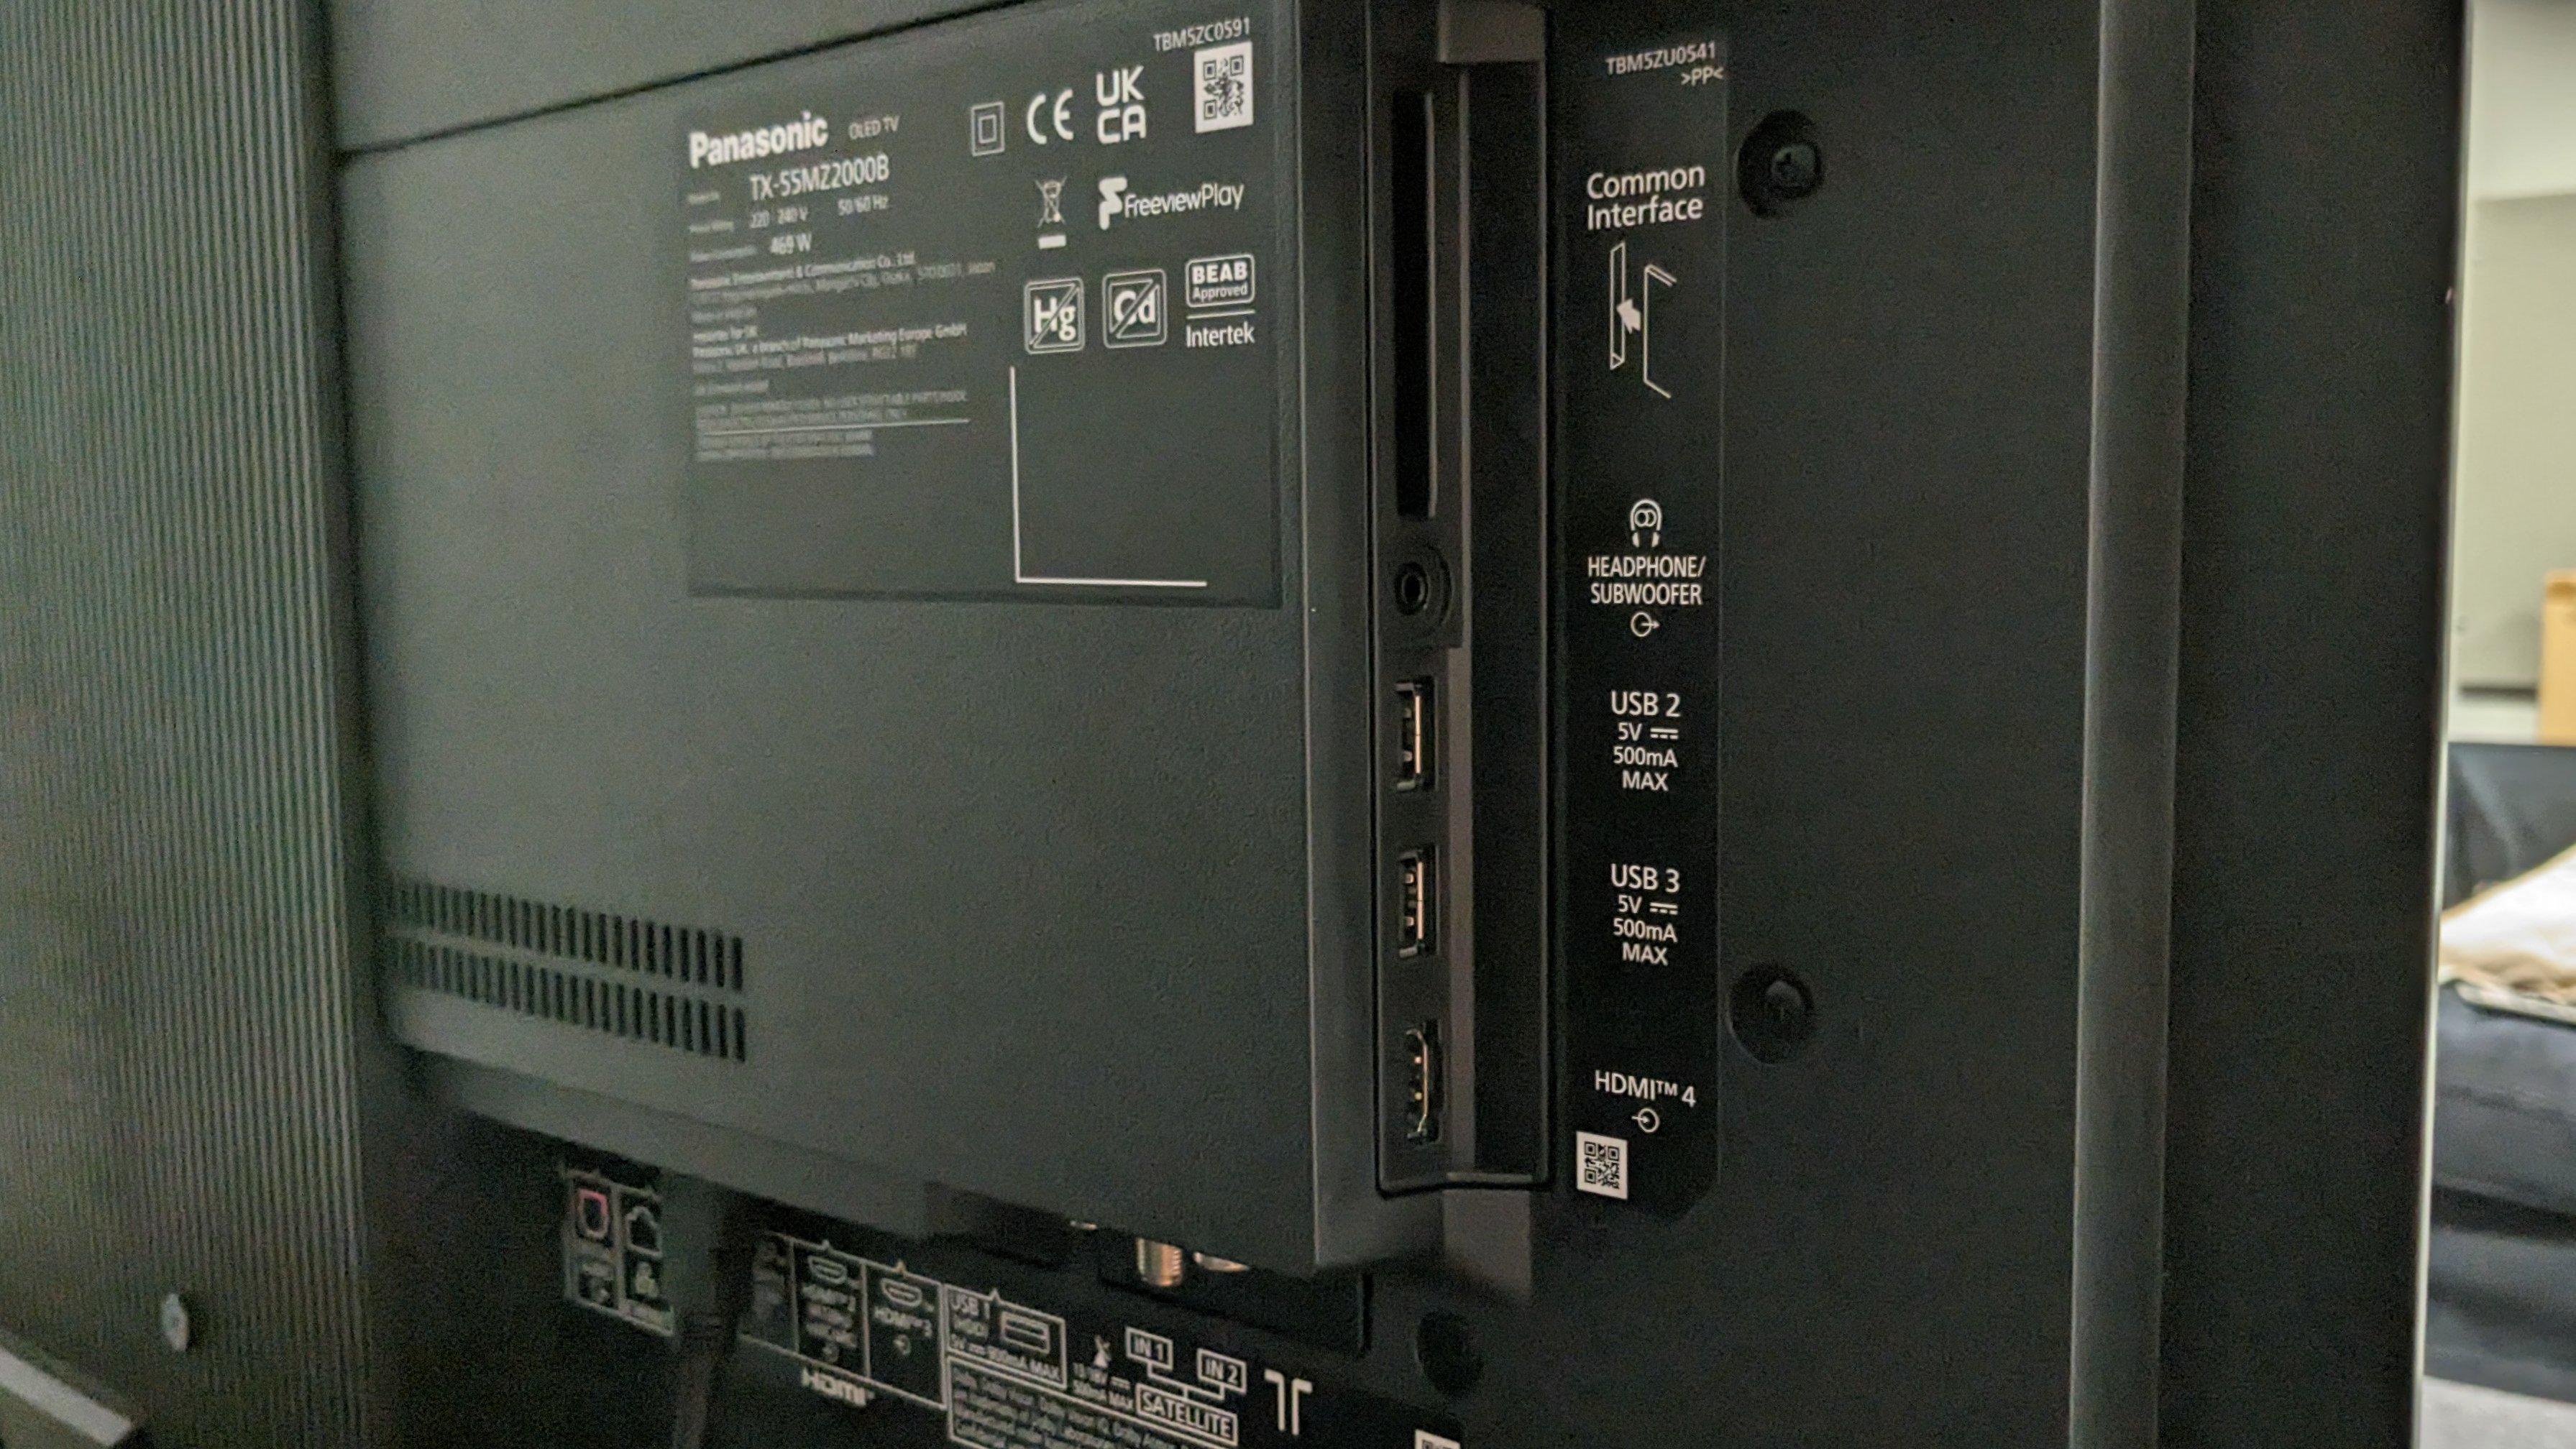 Panasonic MZ2000 connection panel including HDMI ports